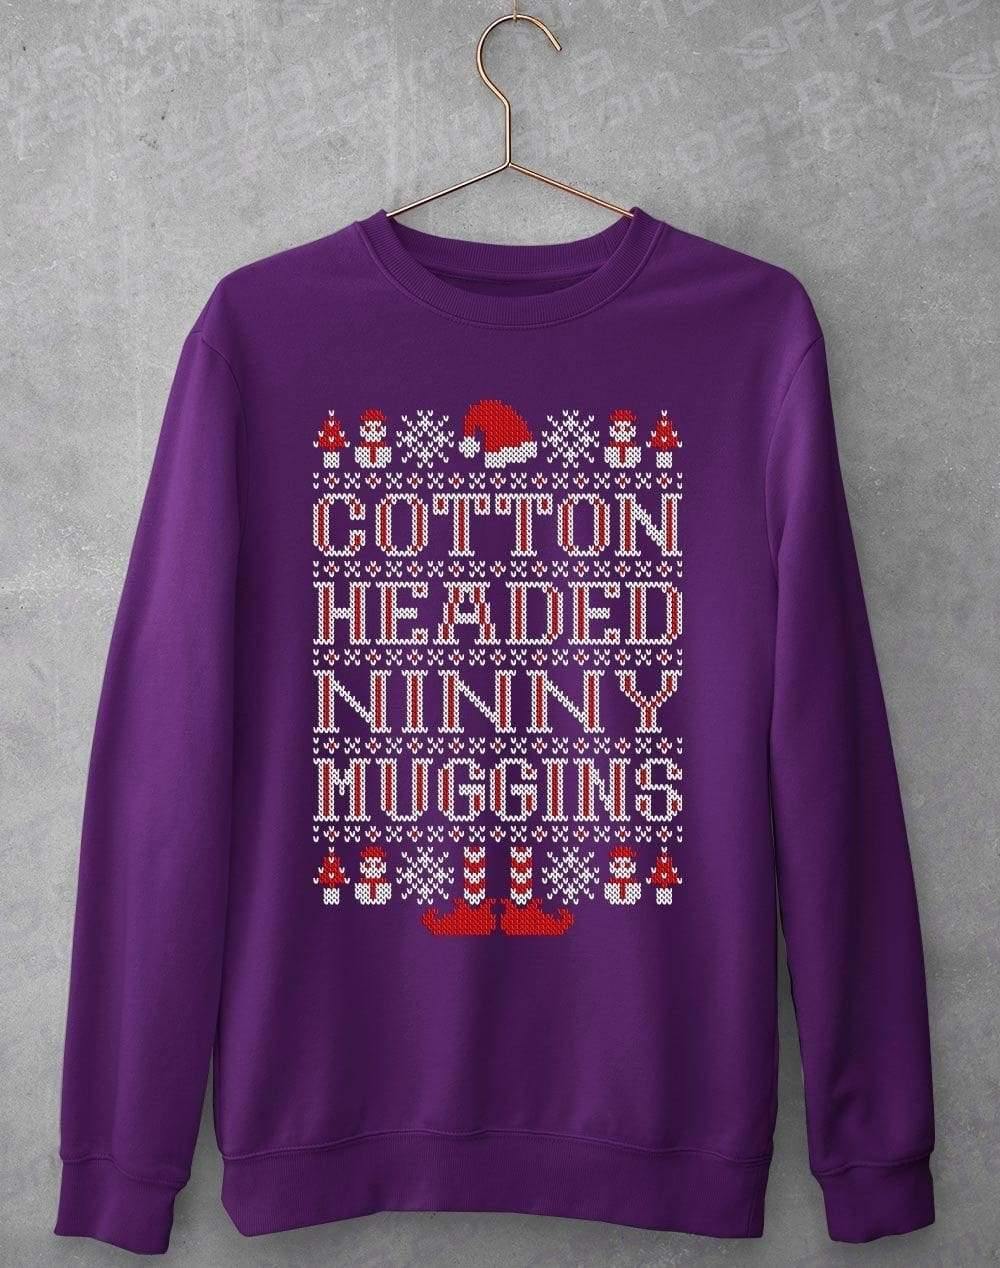 Cotton Headed Ninny Muggins Festive Knitted-Look Sweatshirt S / Purple  - Off World Tees